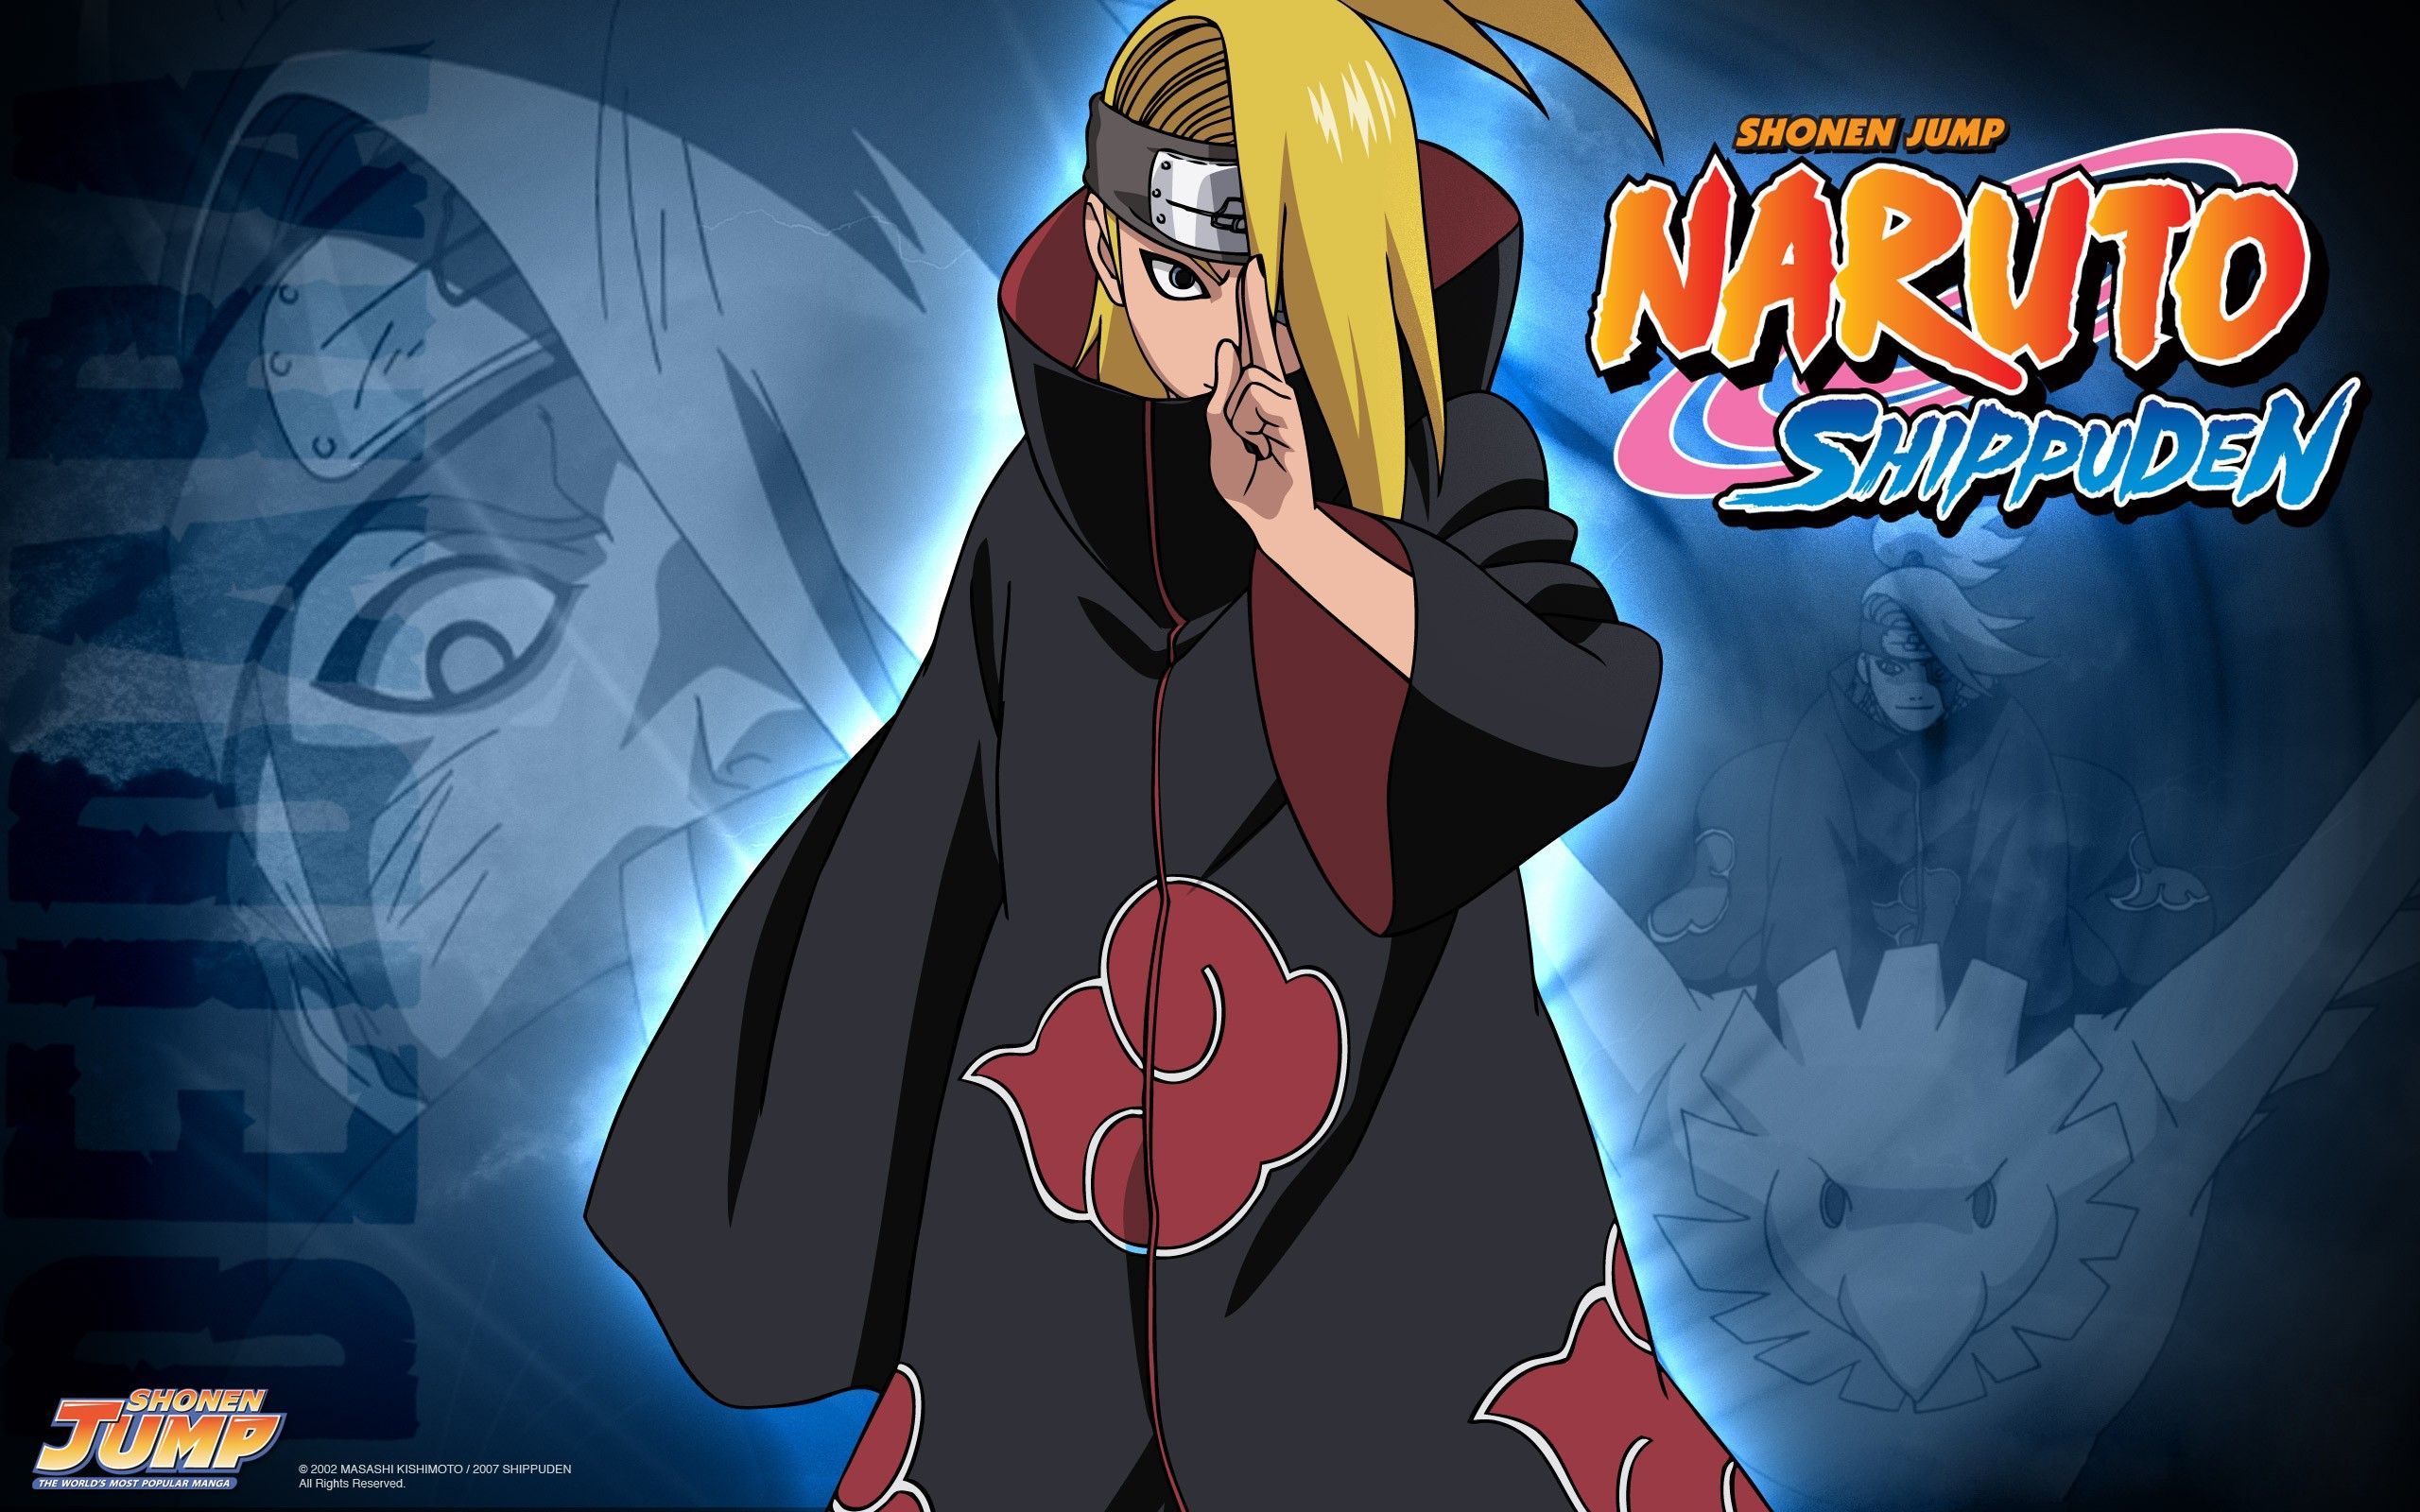 Anime Naruto Wallpaper